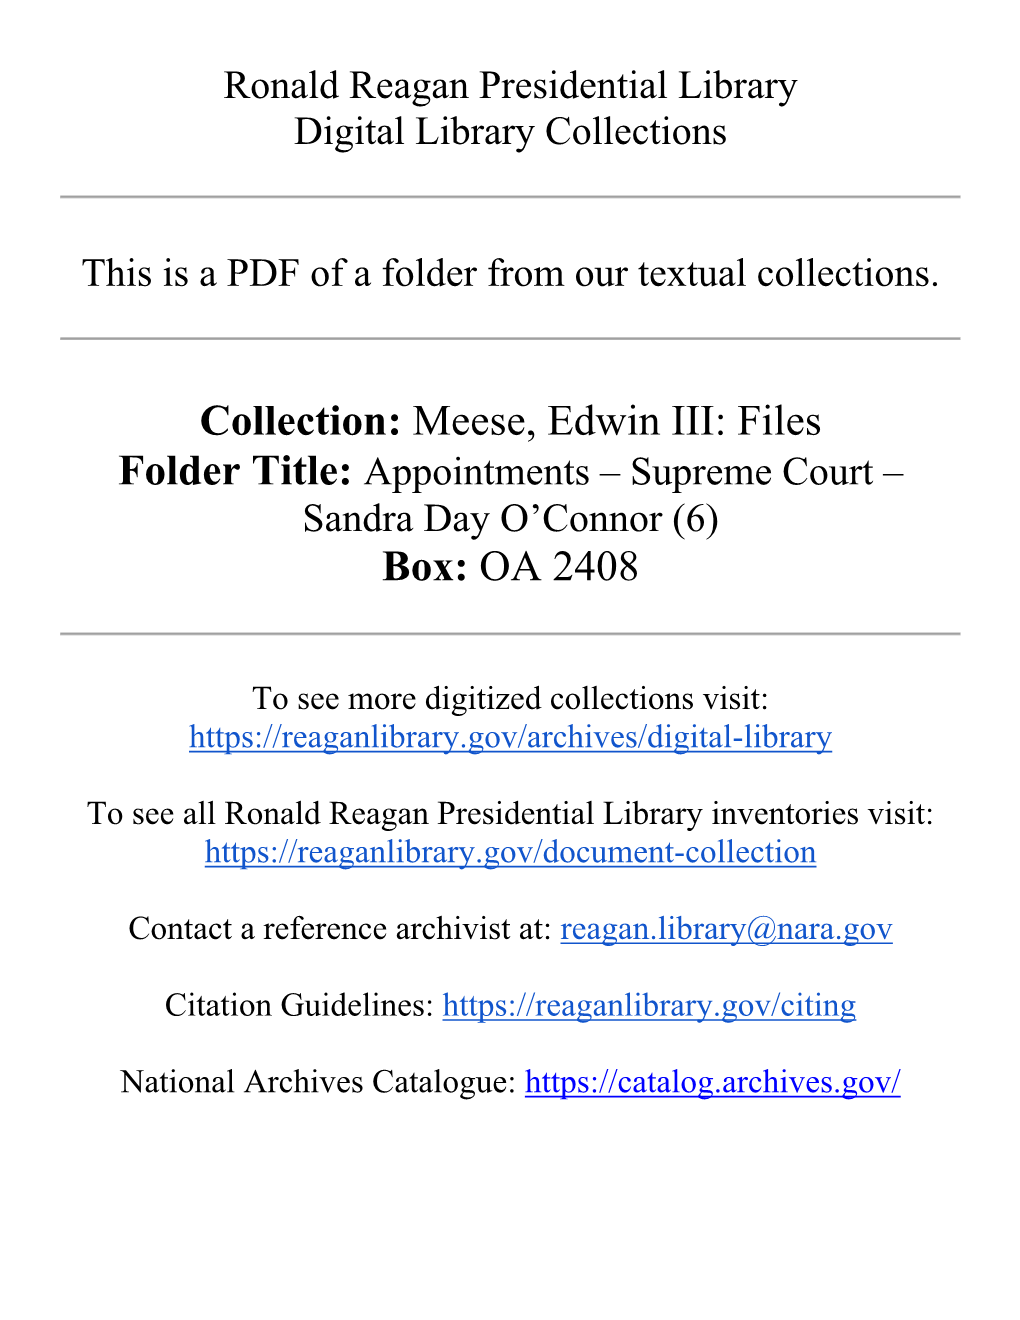 Collection: Meese, Edwin III: Files Box: OA 2408